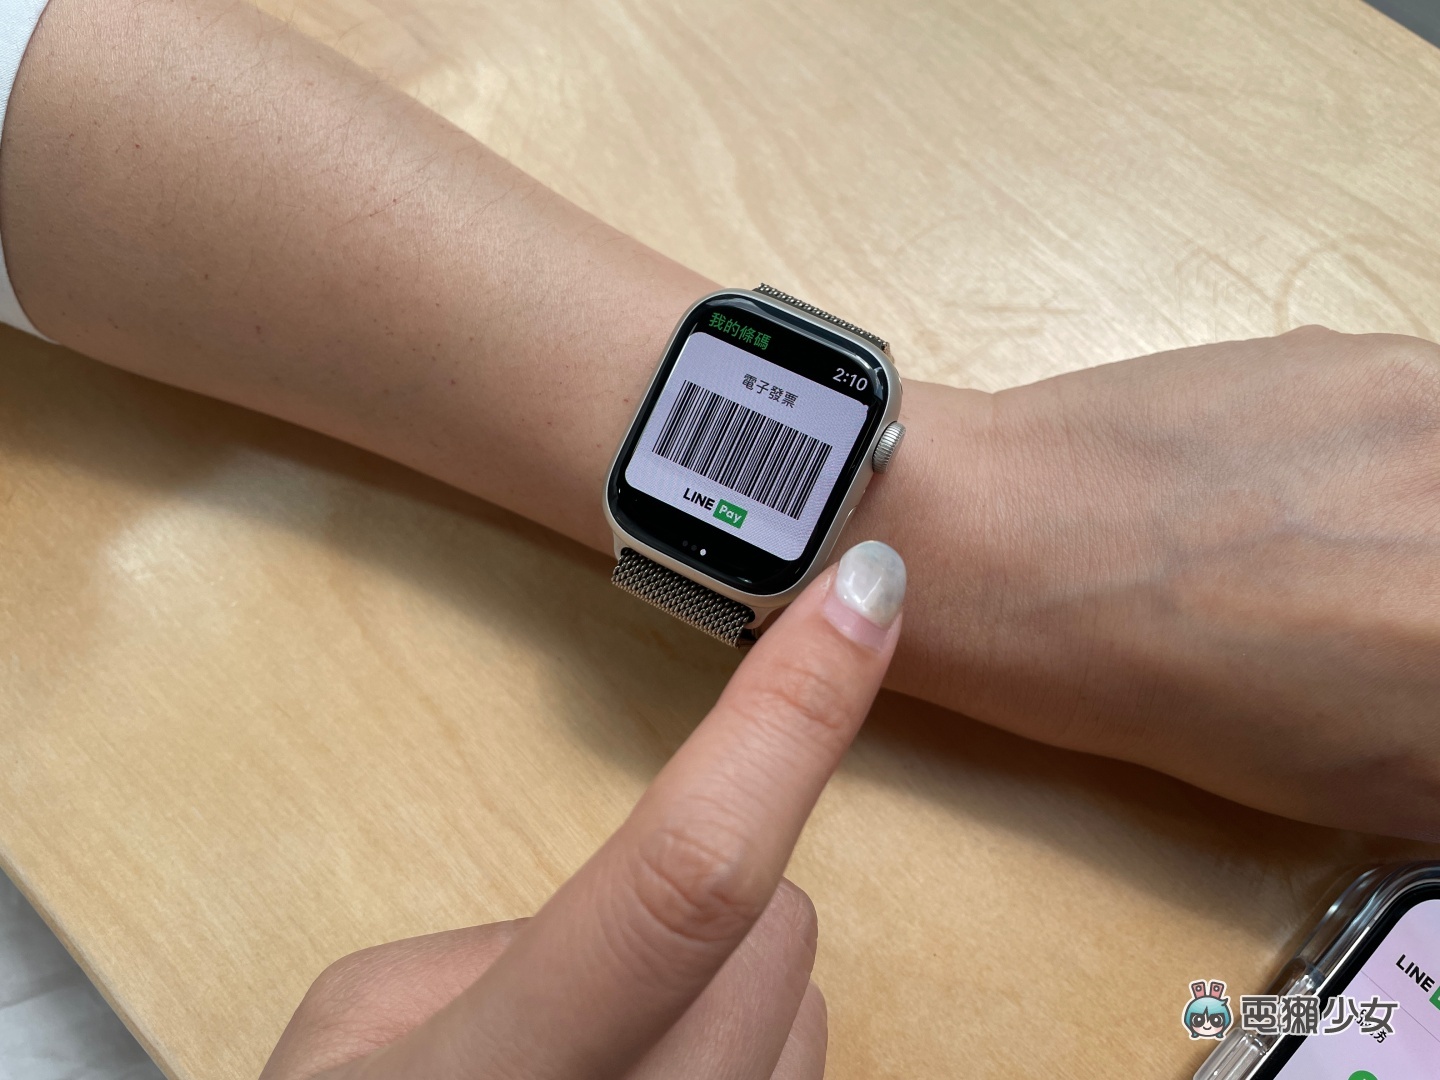 Apple Watch 實用小技巧！一鍵開啟 LINE Pay 條碼付款超方便